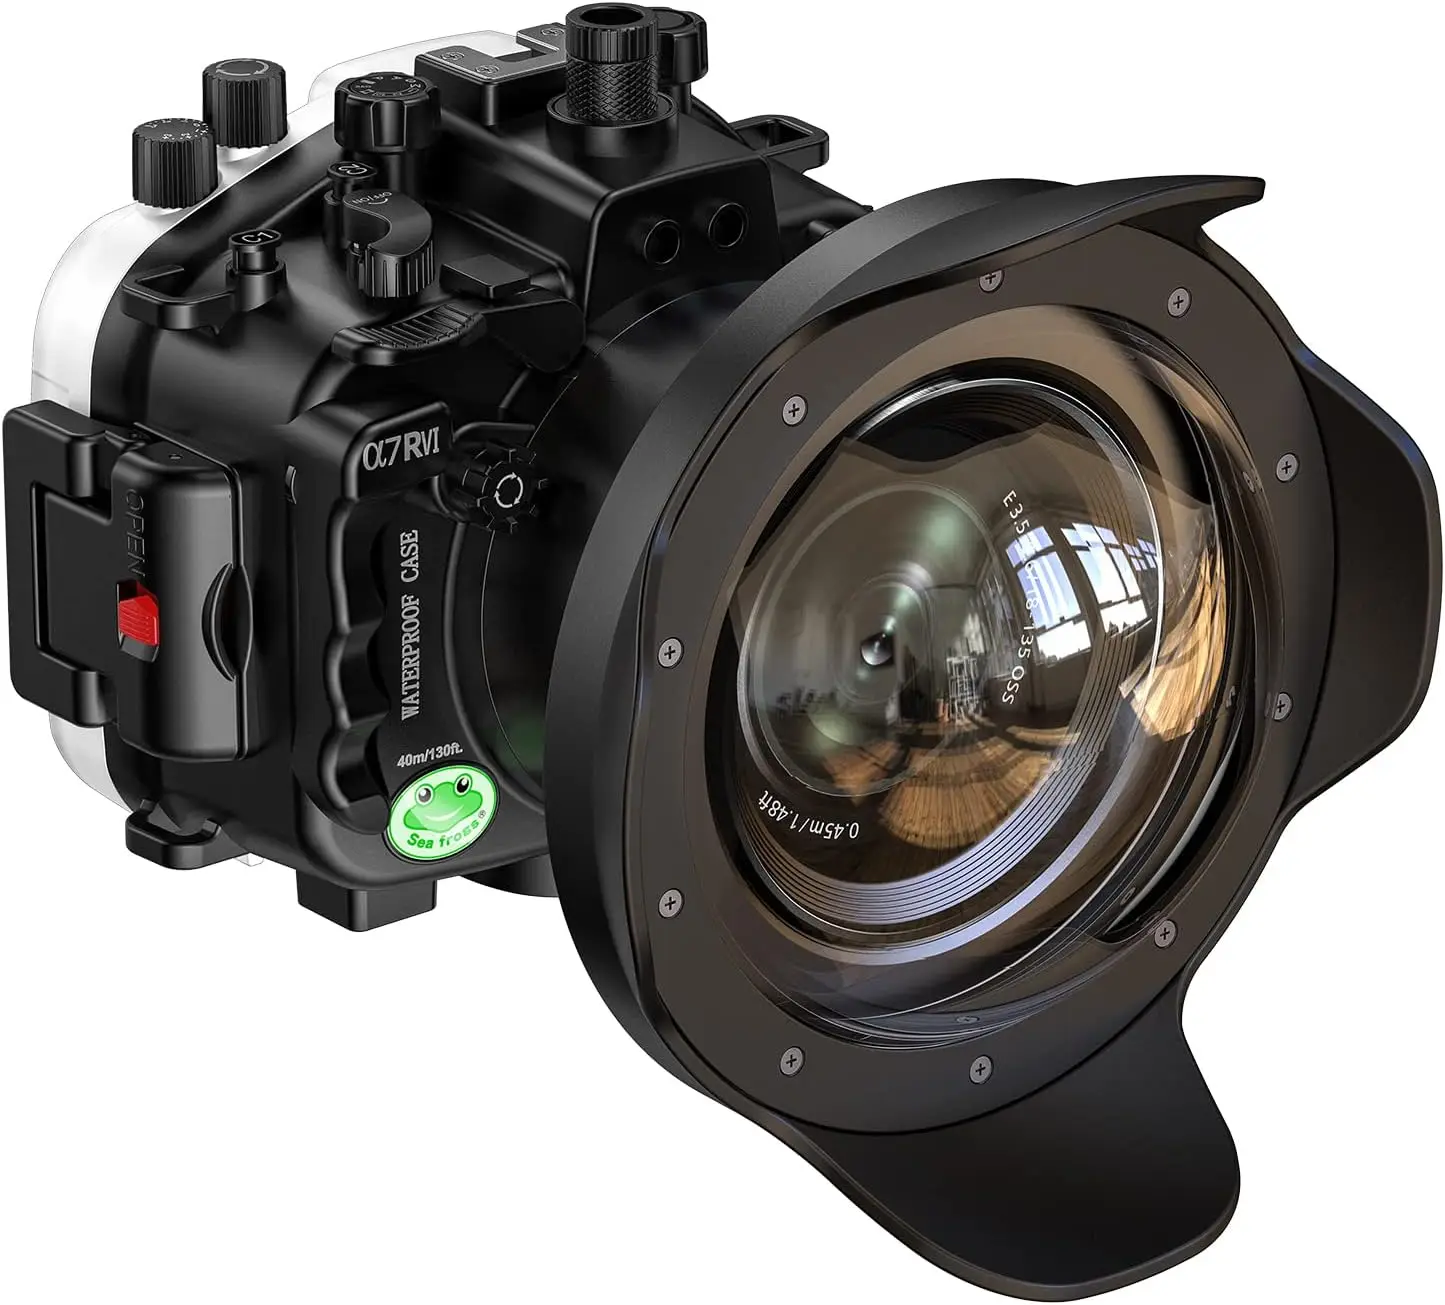 

CANMEELUX Waterproof housing Case Diving 40m/130ft Work for Sony A7RIV with16-35mm f4.0 ZA OS,16-35mm f2.8 GM,24-70mm f4.0 lens